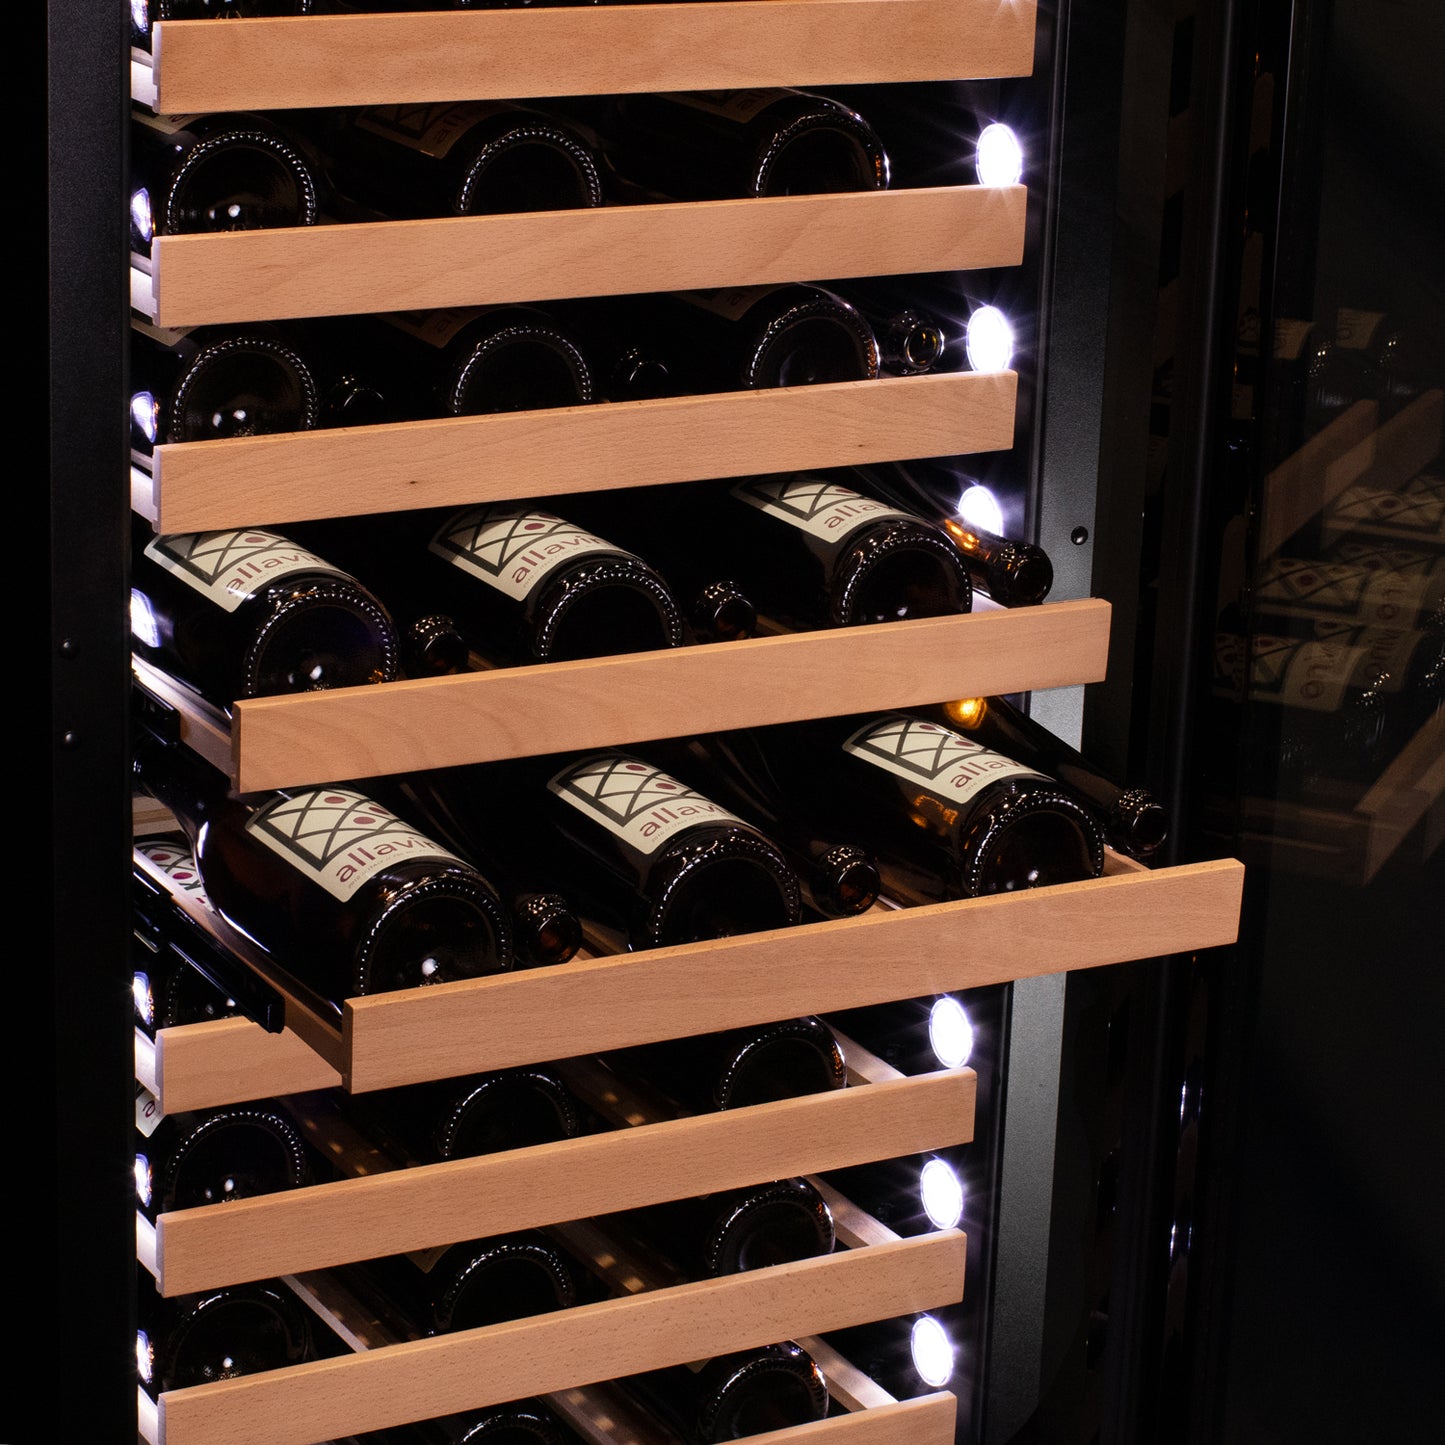 Allavino 107 Bottle Single Zone Panel Ready Wine Refrigerator